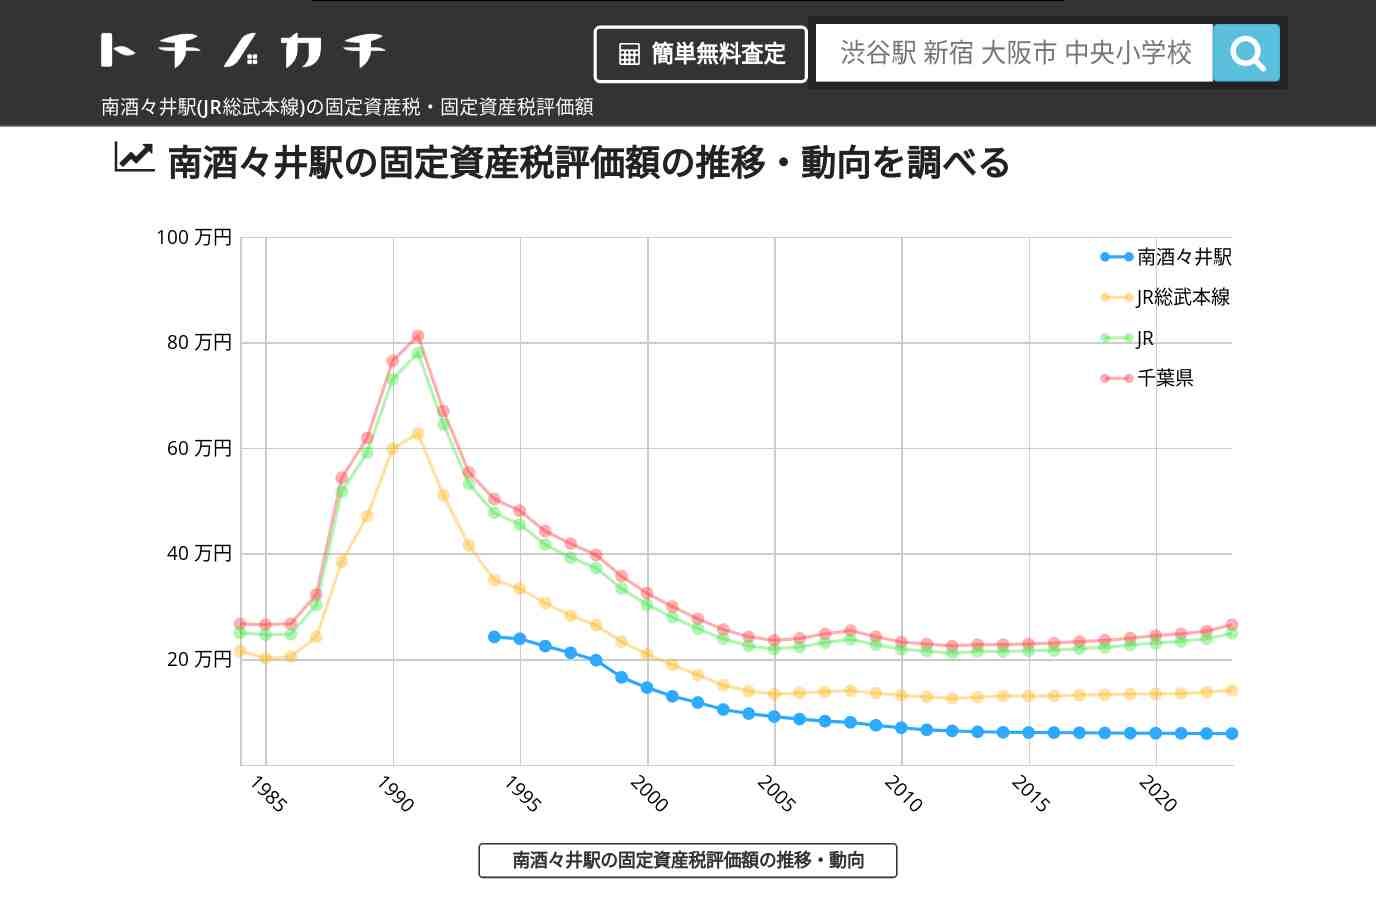 南酒々井駅(JR総武本線)の固定資産税・固定資産税評価額 | トチノカチ